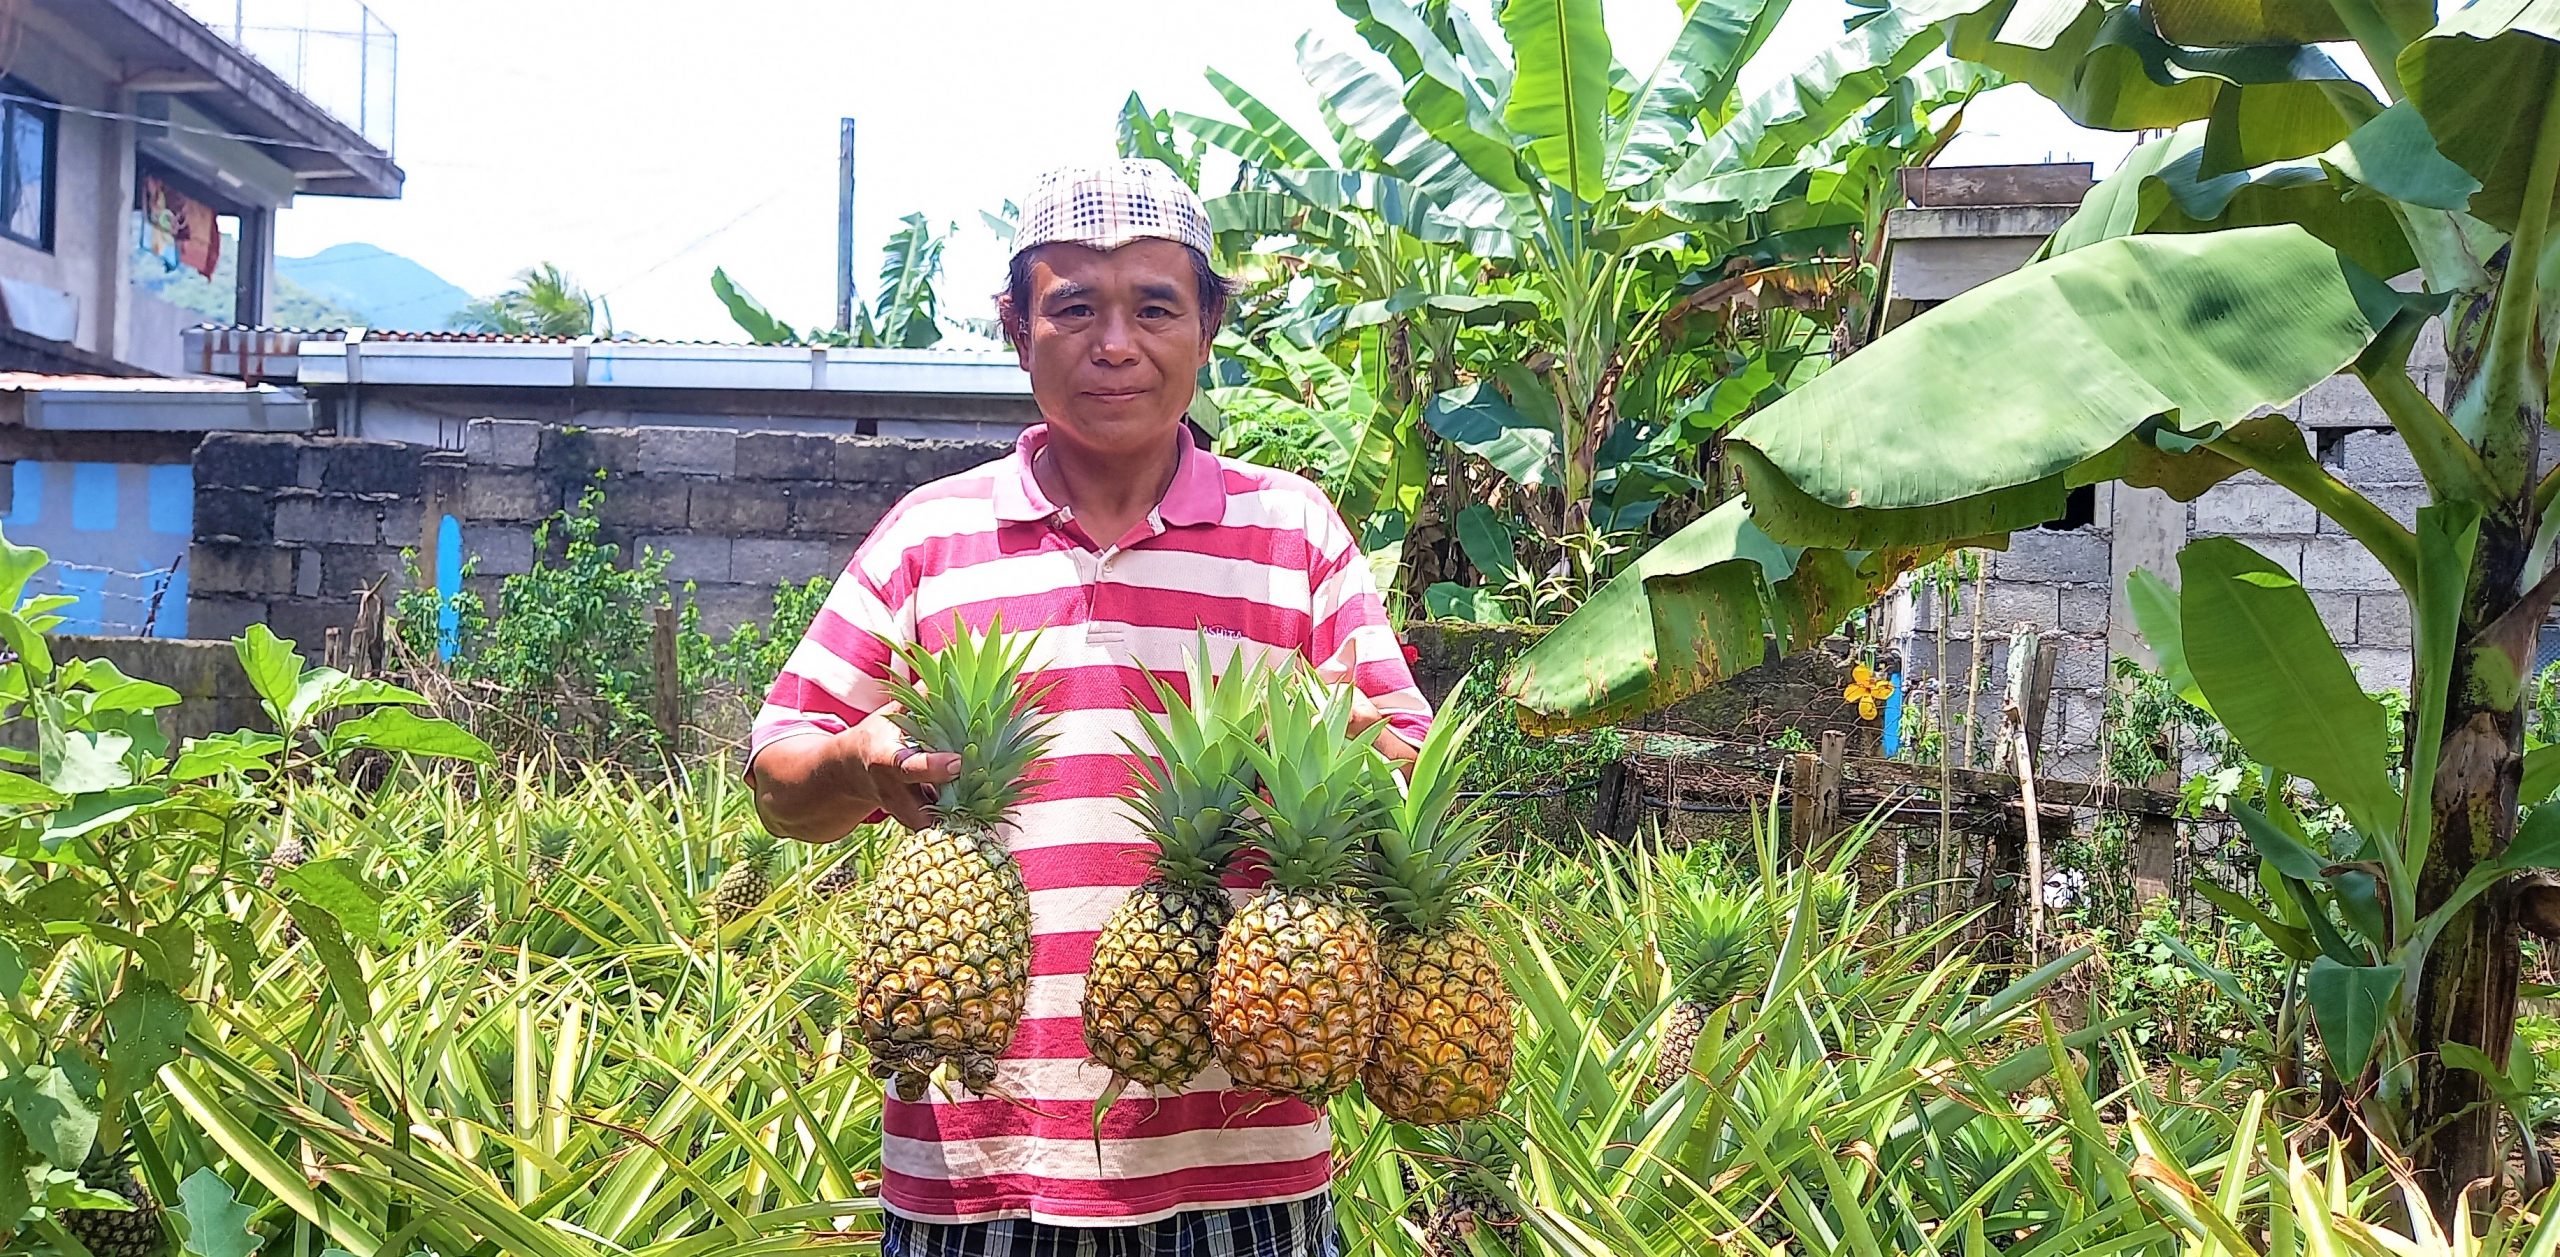 It’s looking “pine”: Yfangad SAAD farmers pineapple production